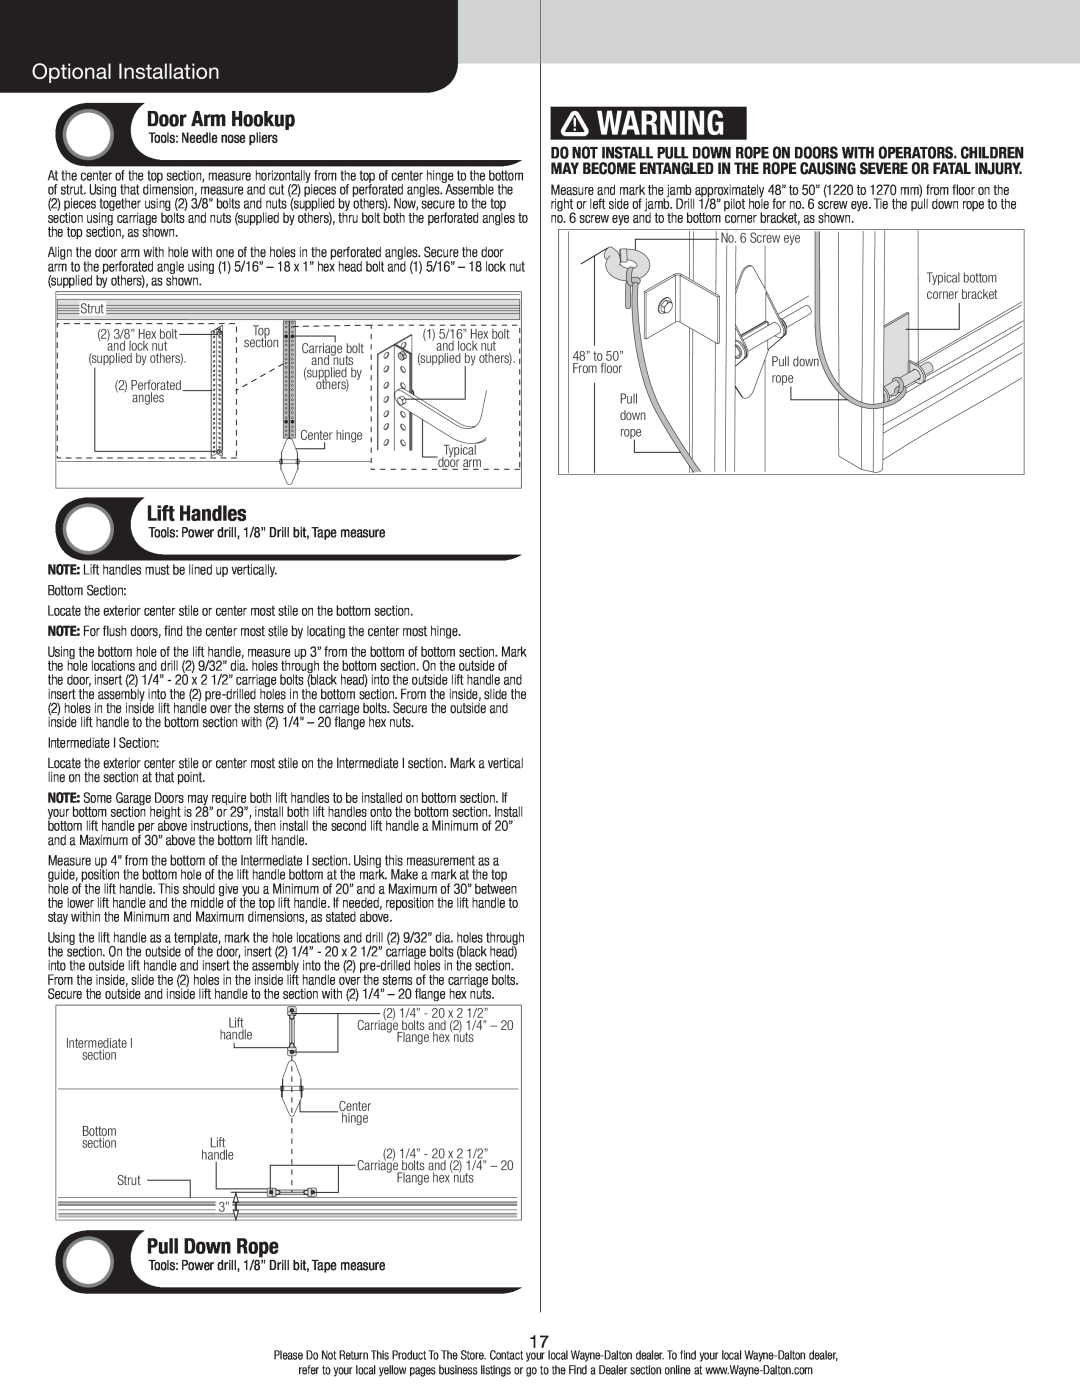 Wayne-Dalton 105/110, 310/311 installation instructions Optional Installation, Door Arm Hookup, Lift Handles, Pull Down Rope 